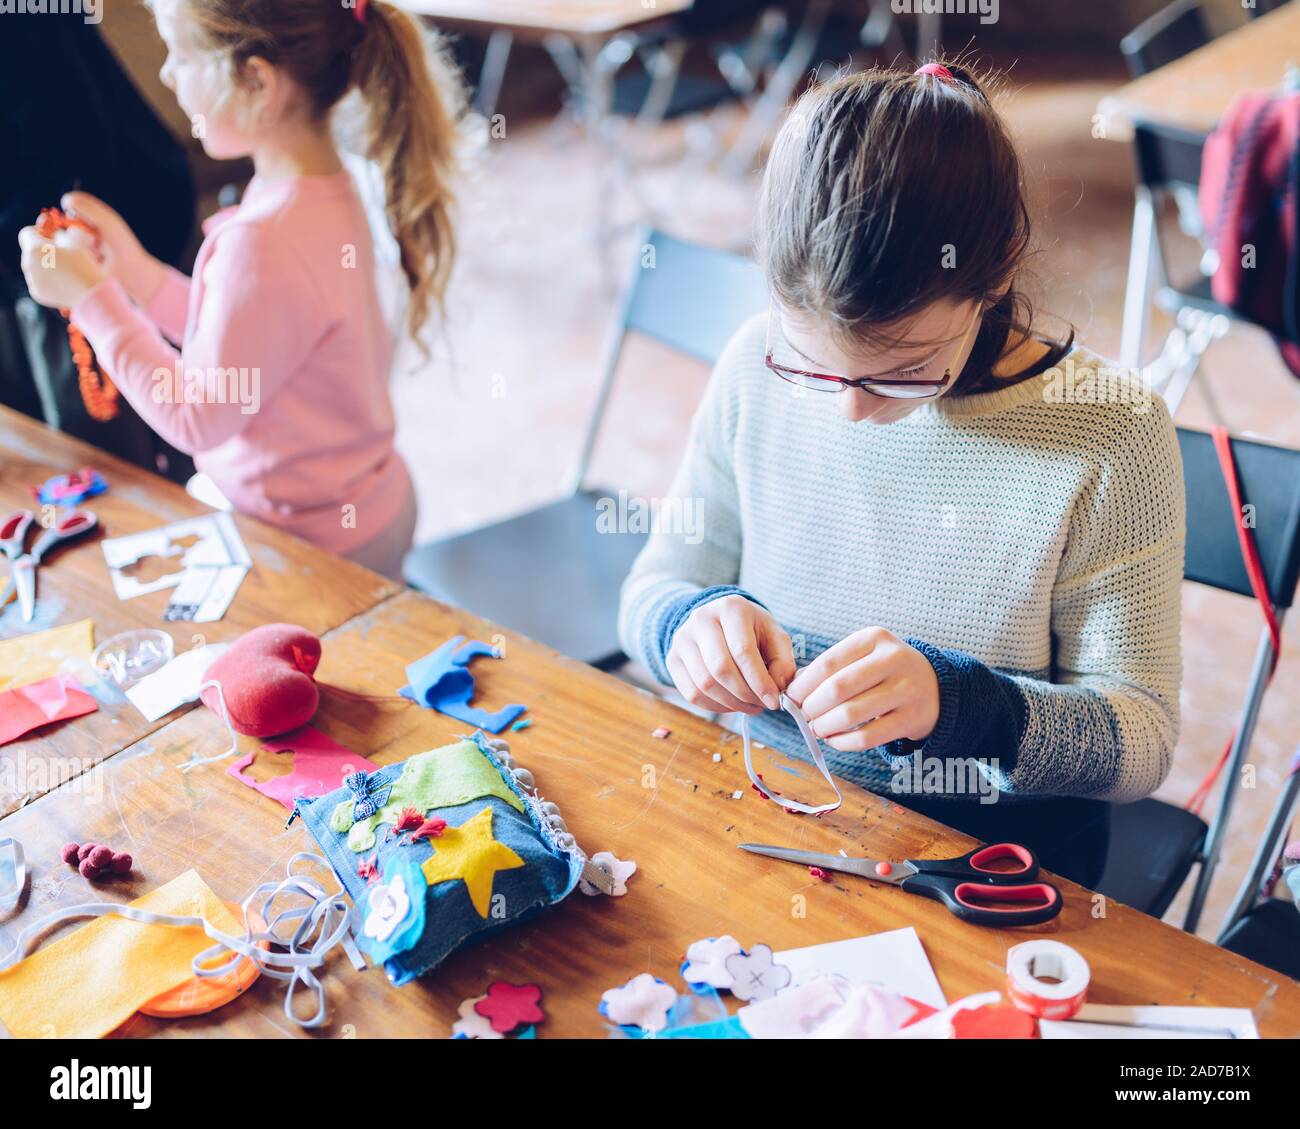 tailor art workshops for children - a girl sewing felt decorations Stock Photo